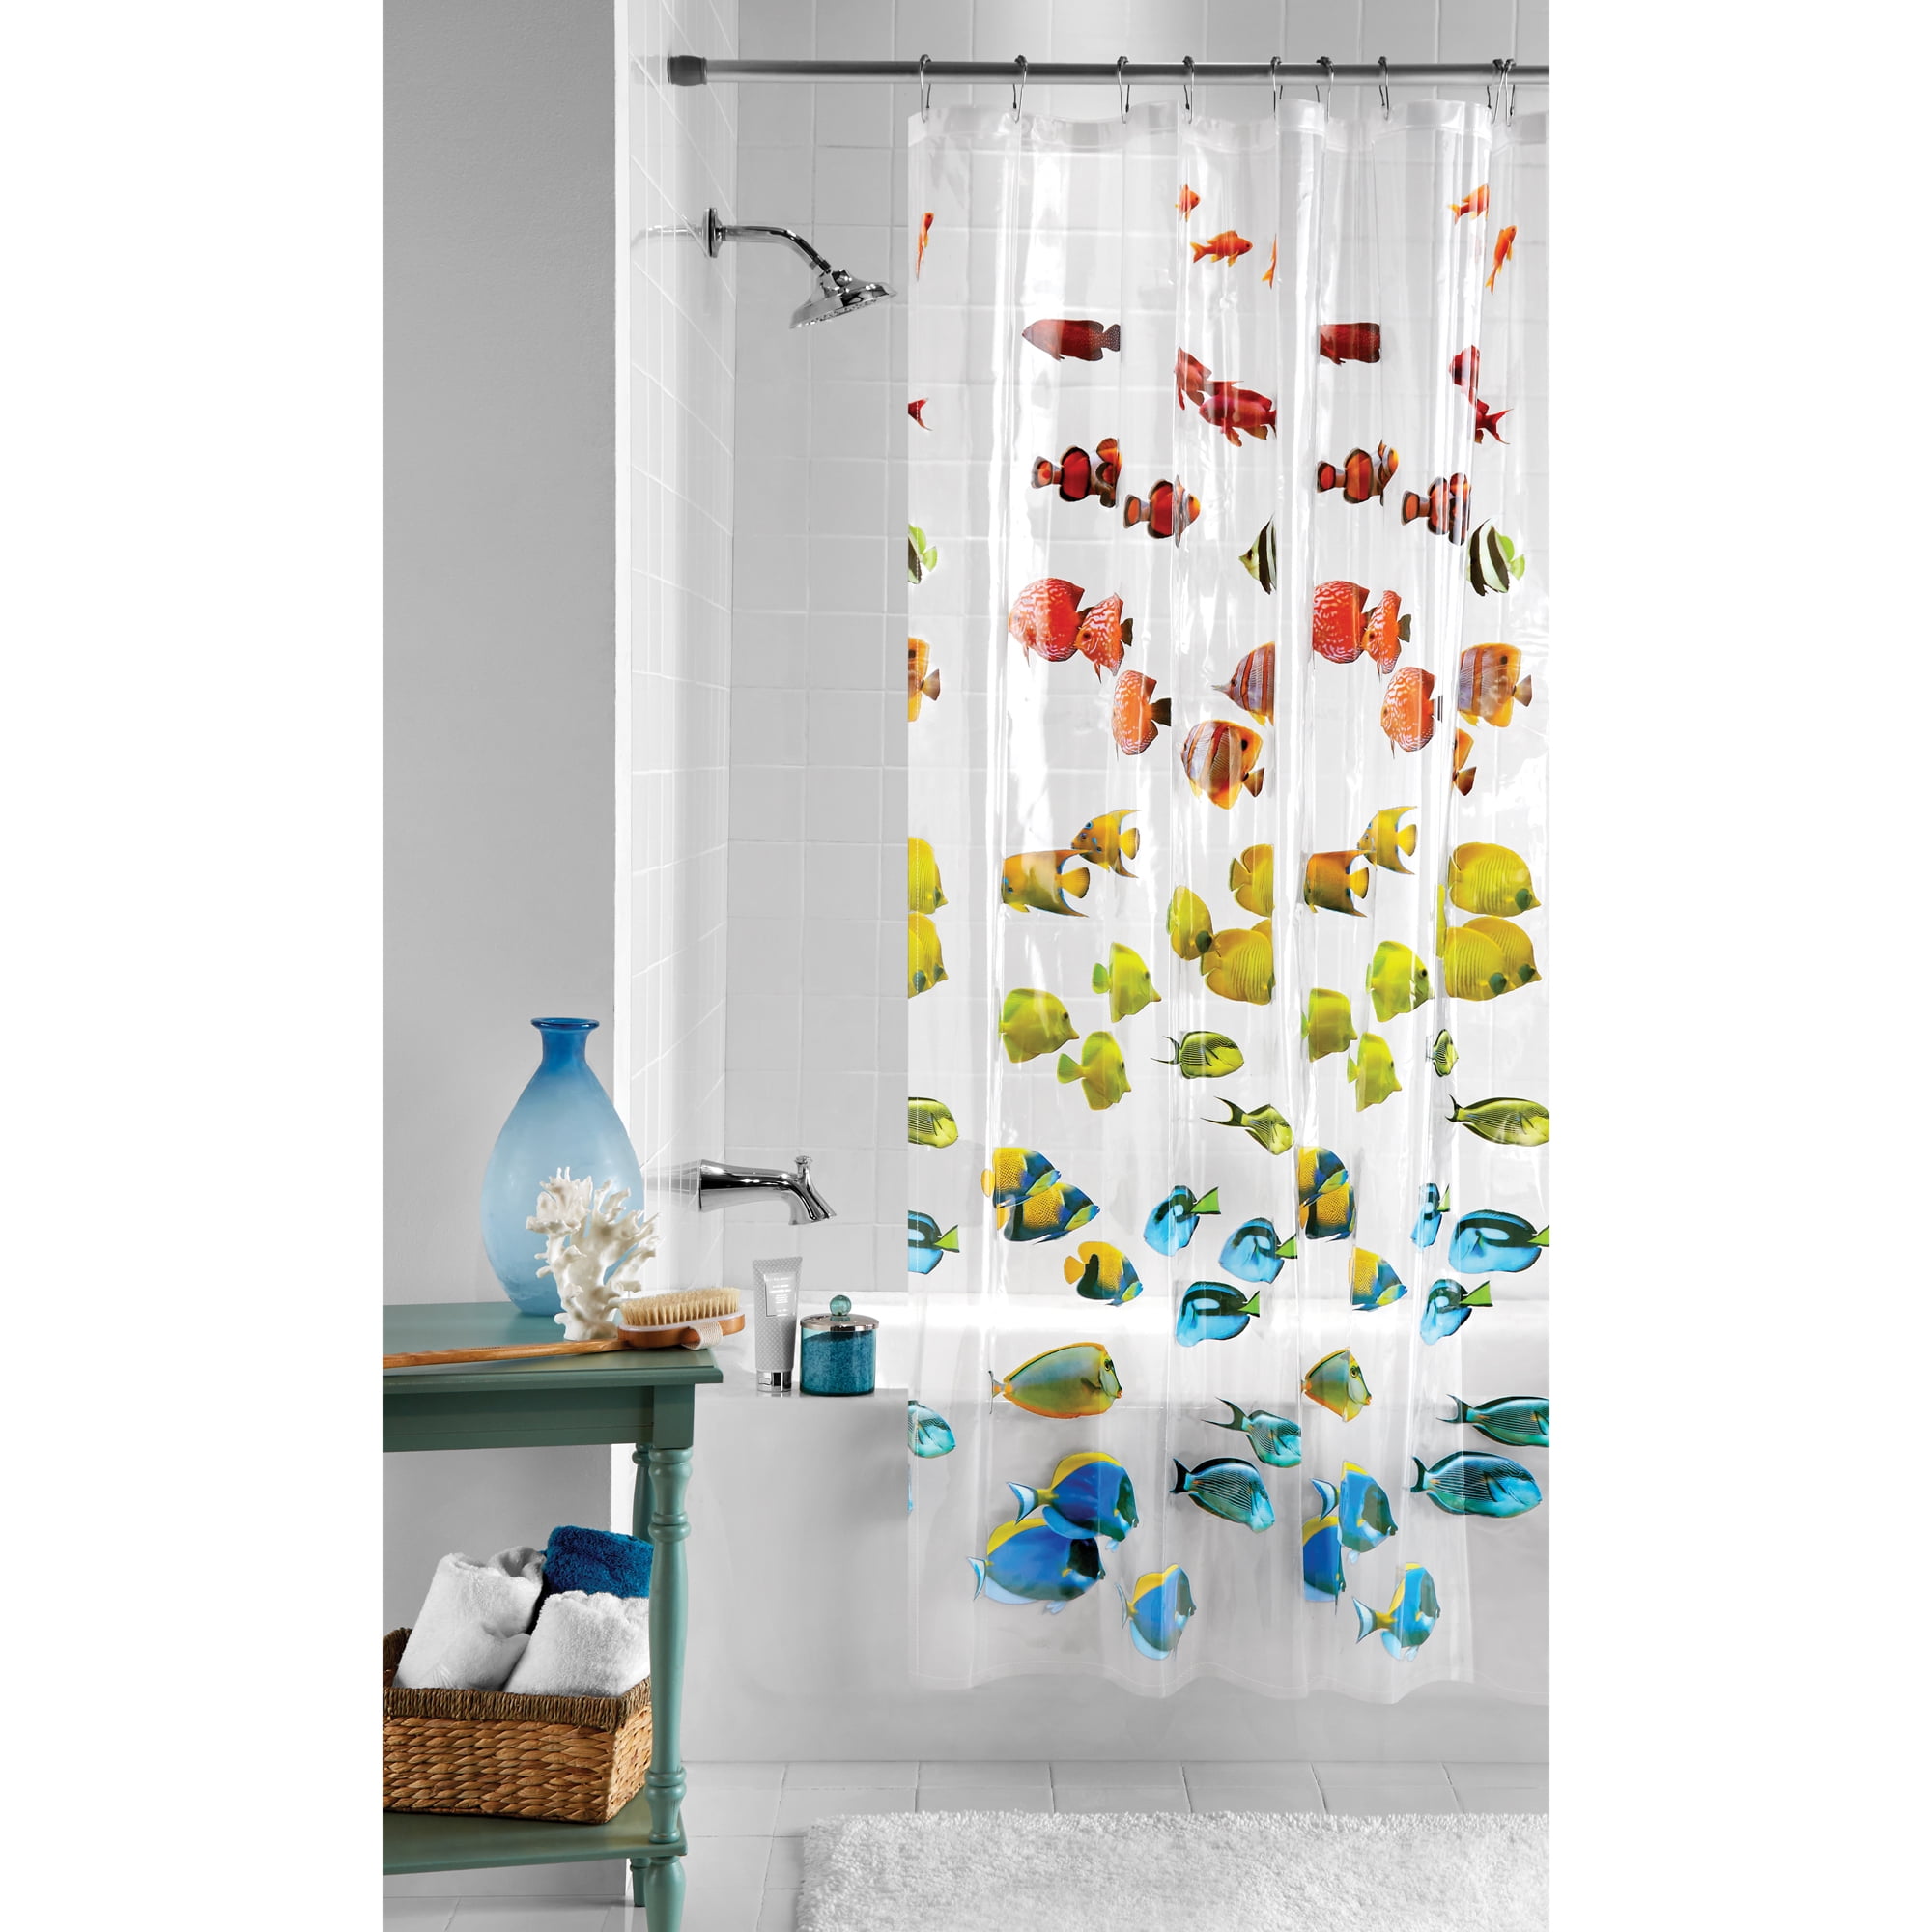 Dinosaur Shower Curtain Bathroom Decoration Decor 70 inches x 70 inches 